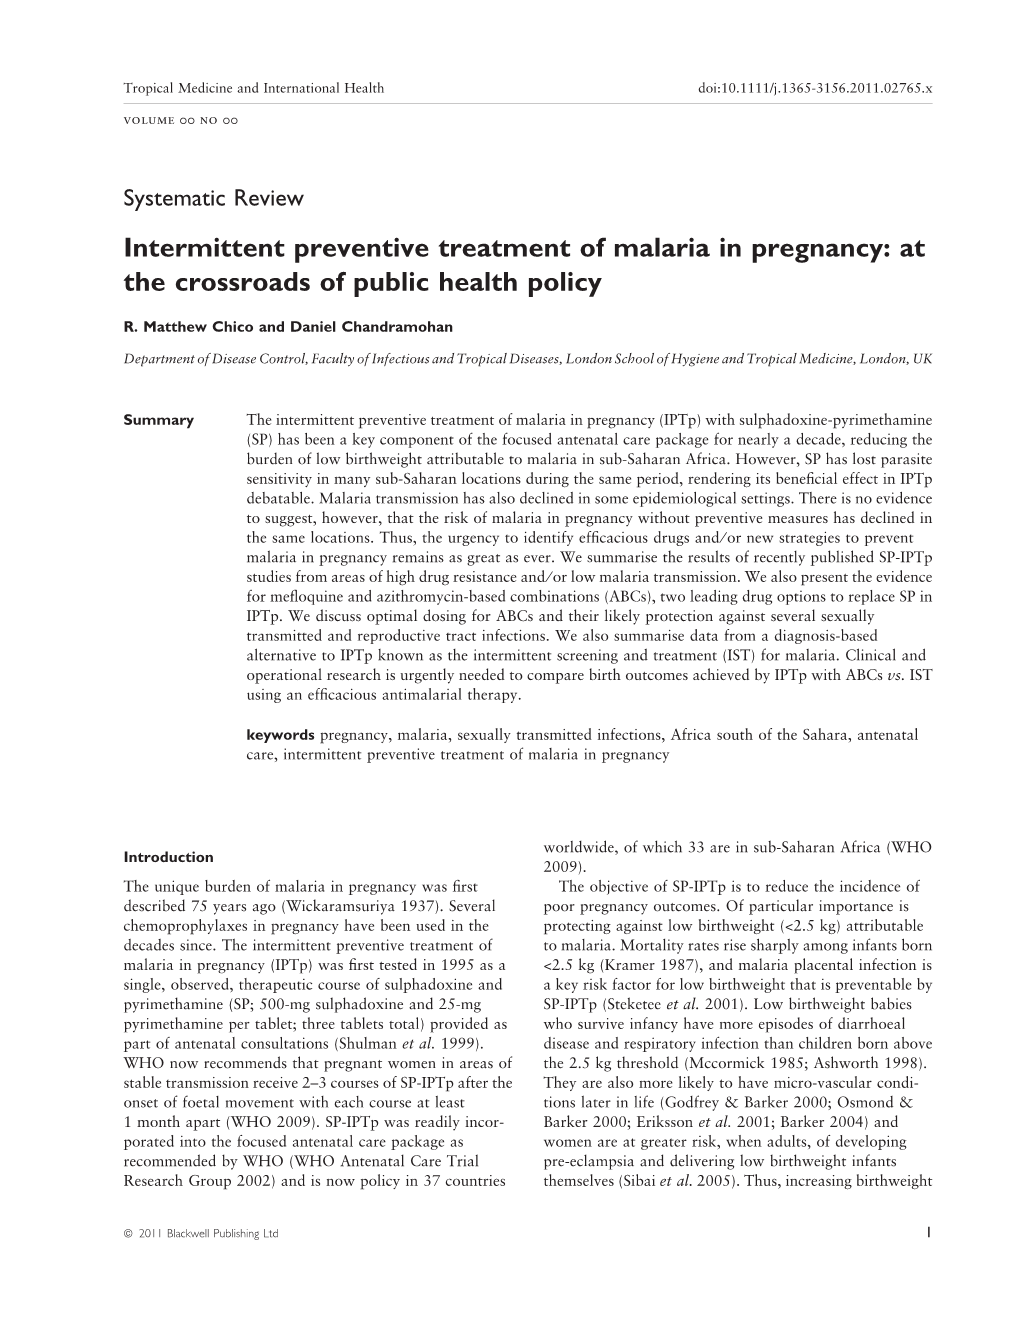 Intermittent Preventive Treatment of Malaria in Pregnancy: at the Crossroads of Public Health Policy